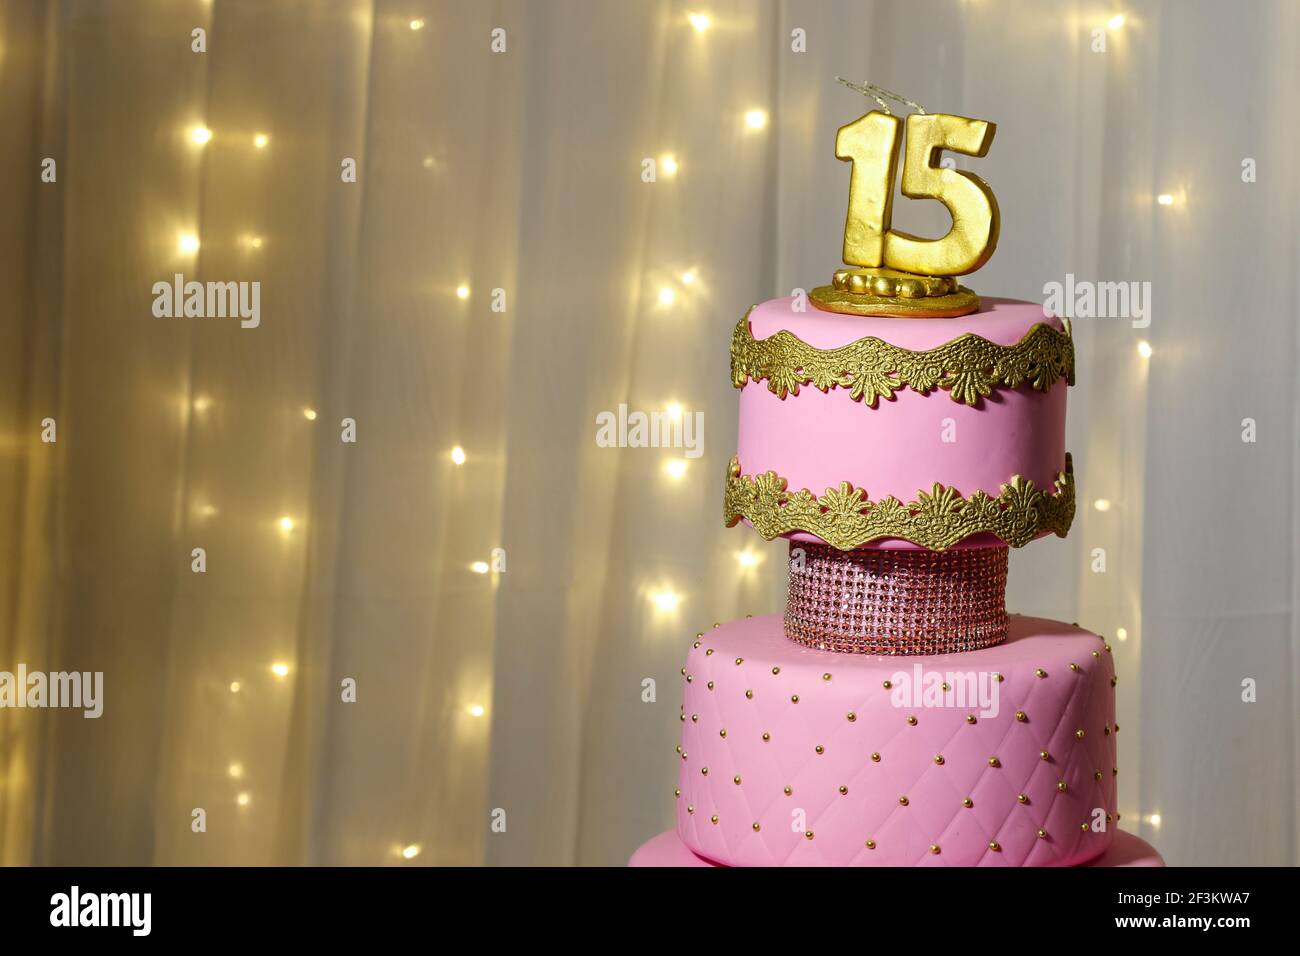 birthday cakes for girls 15th birthday